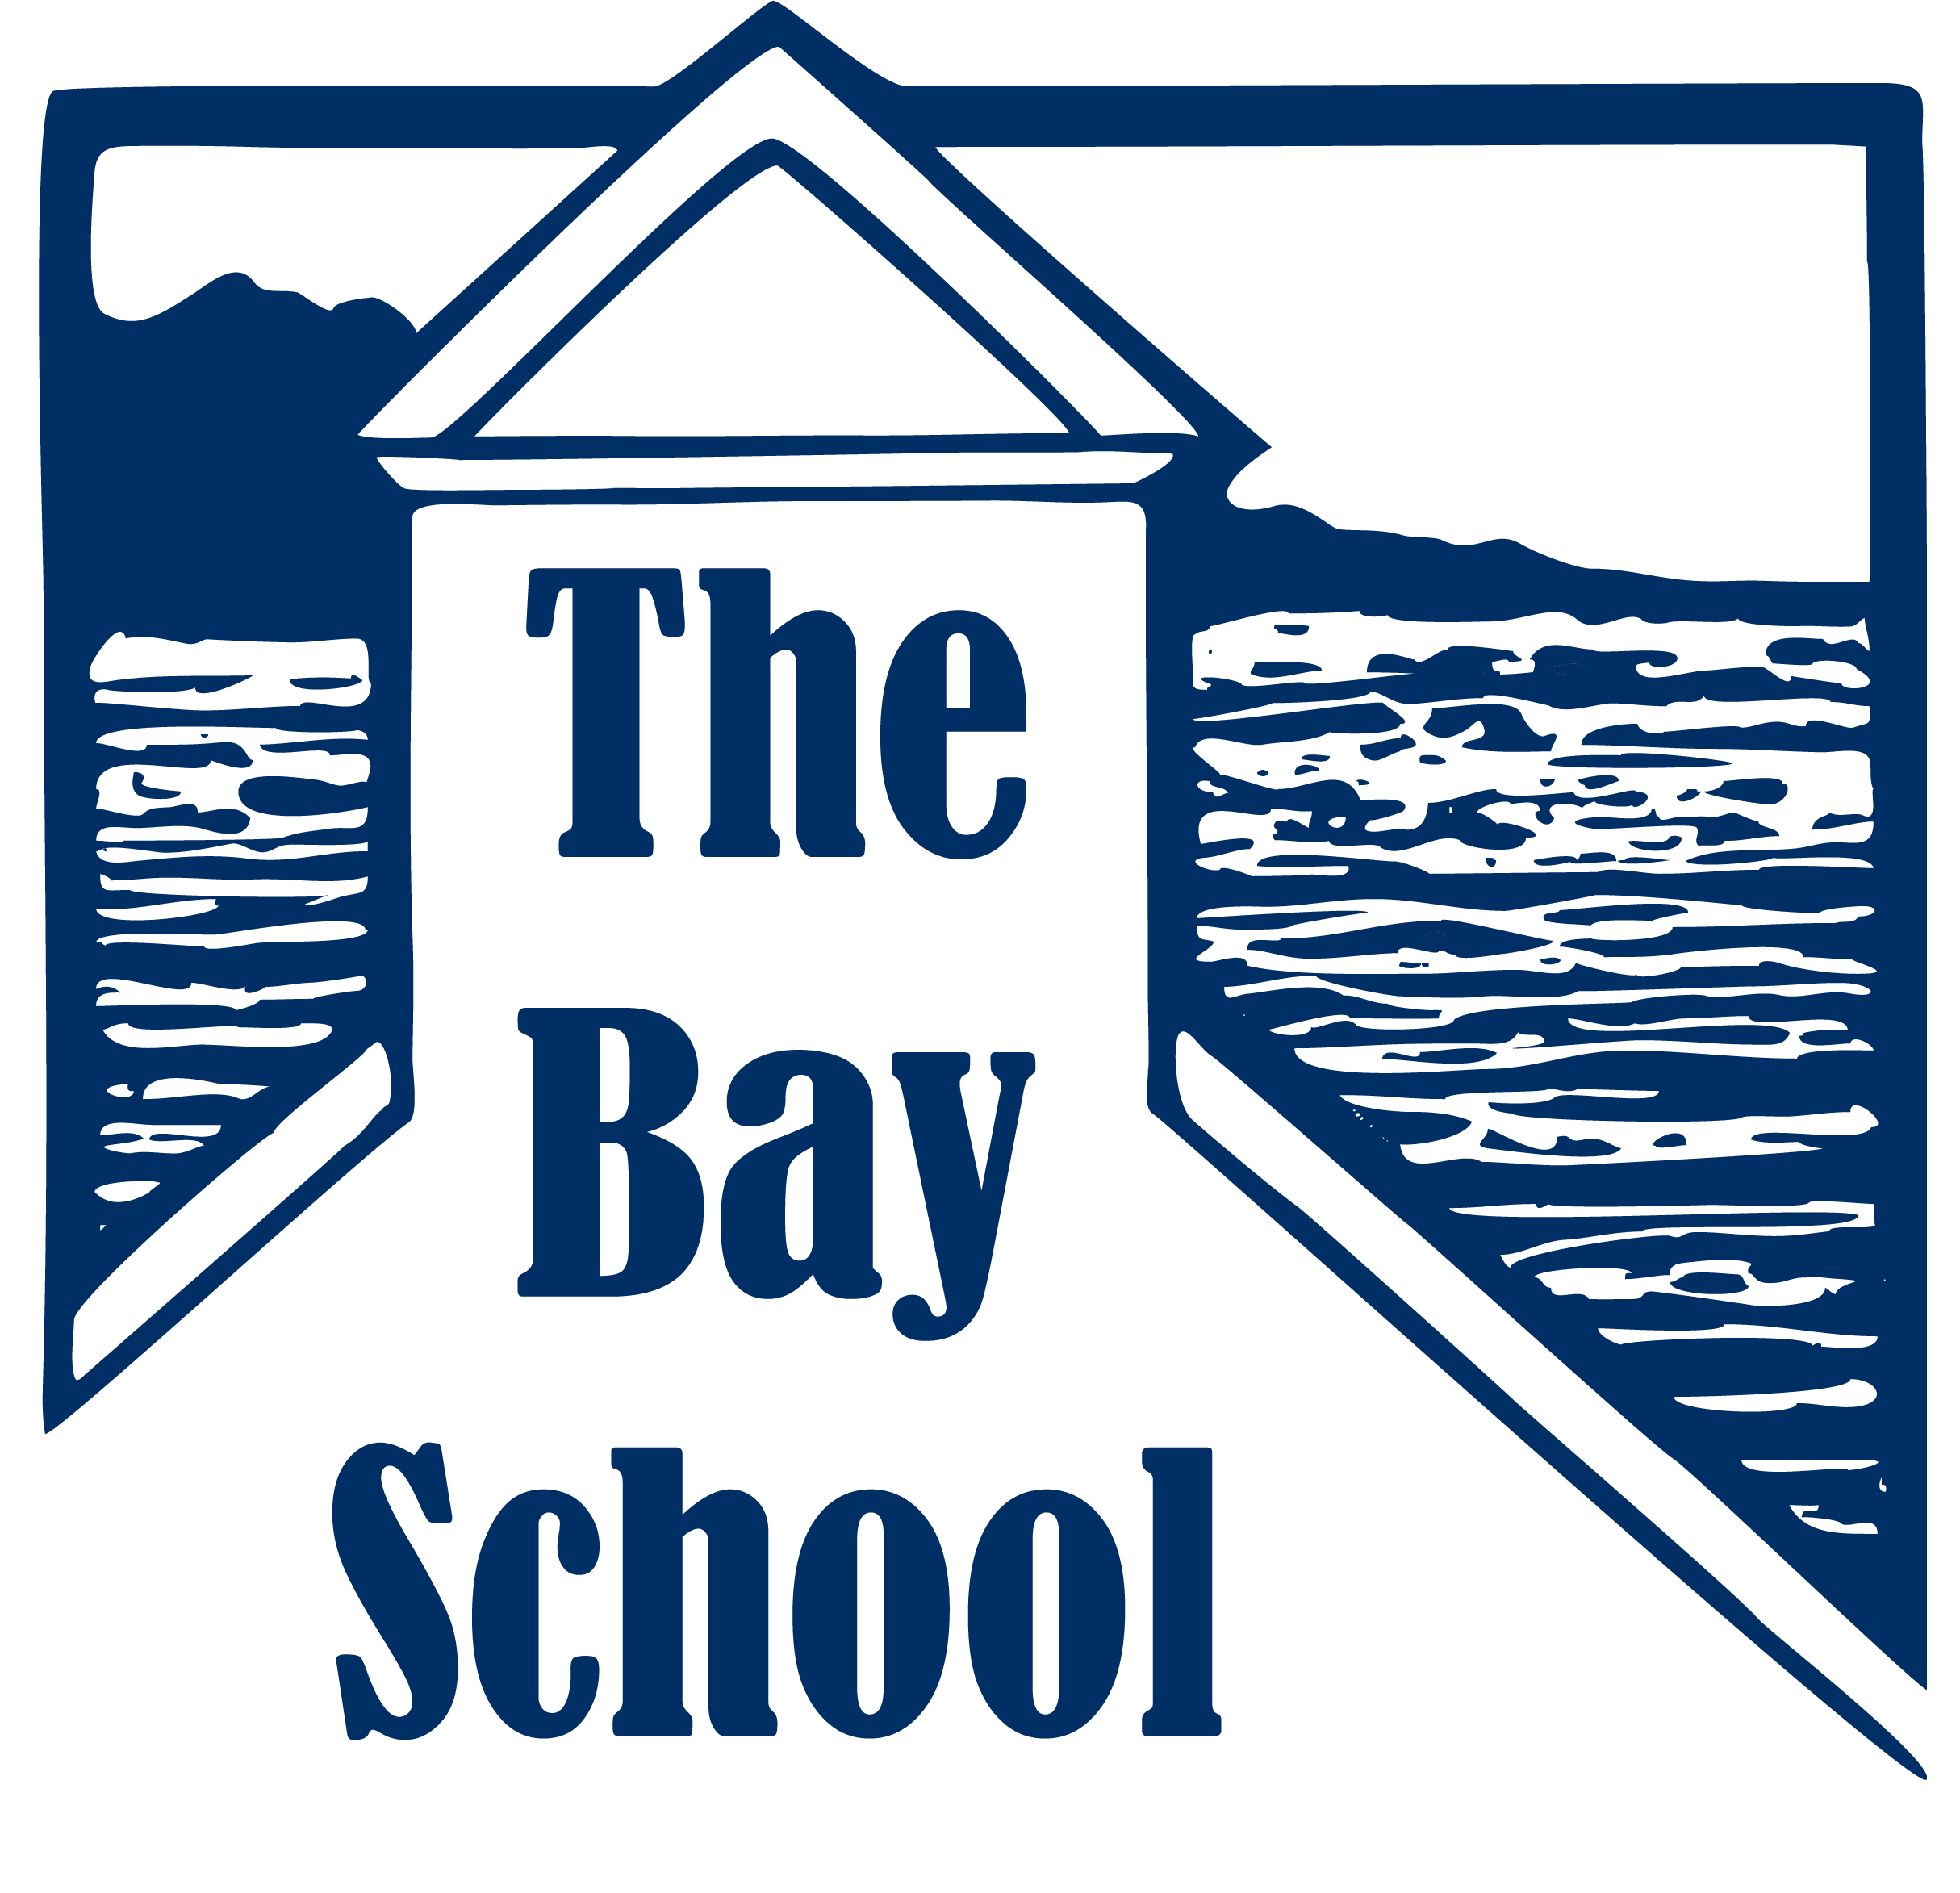 The Bay School